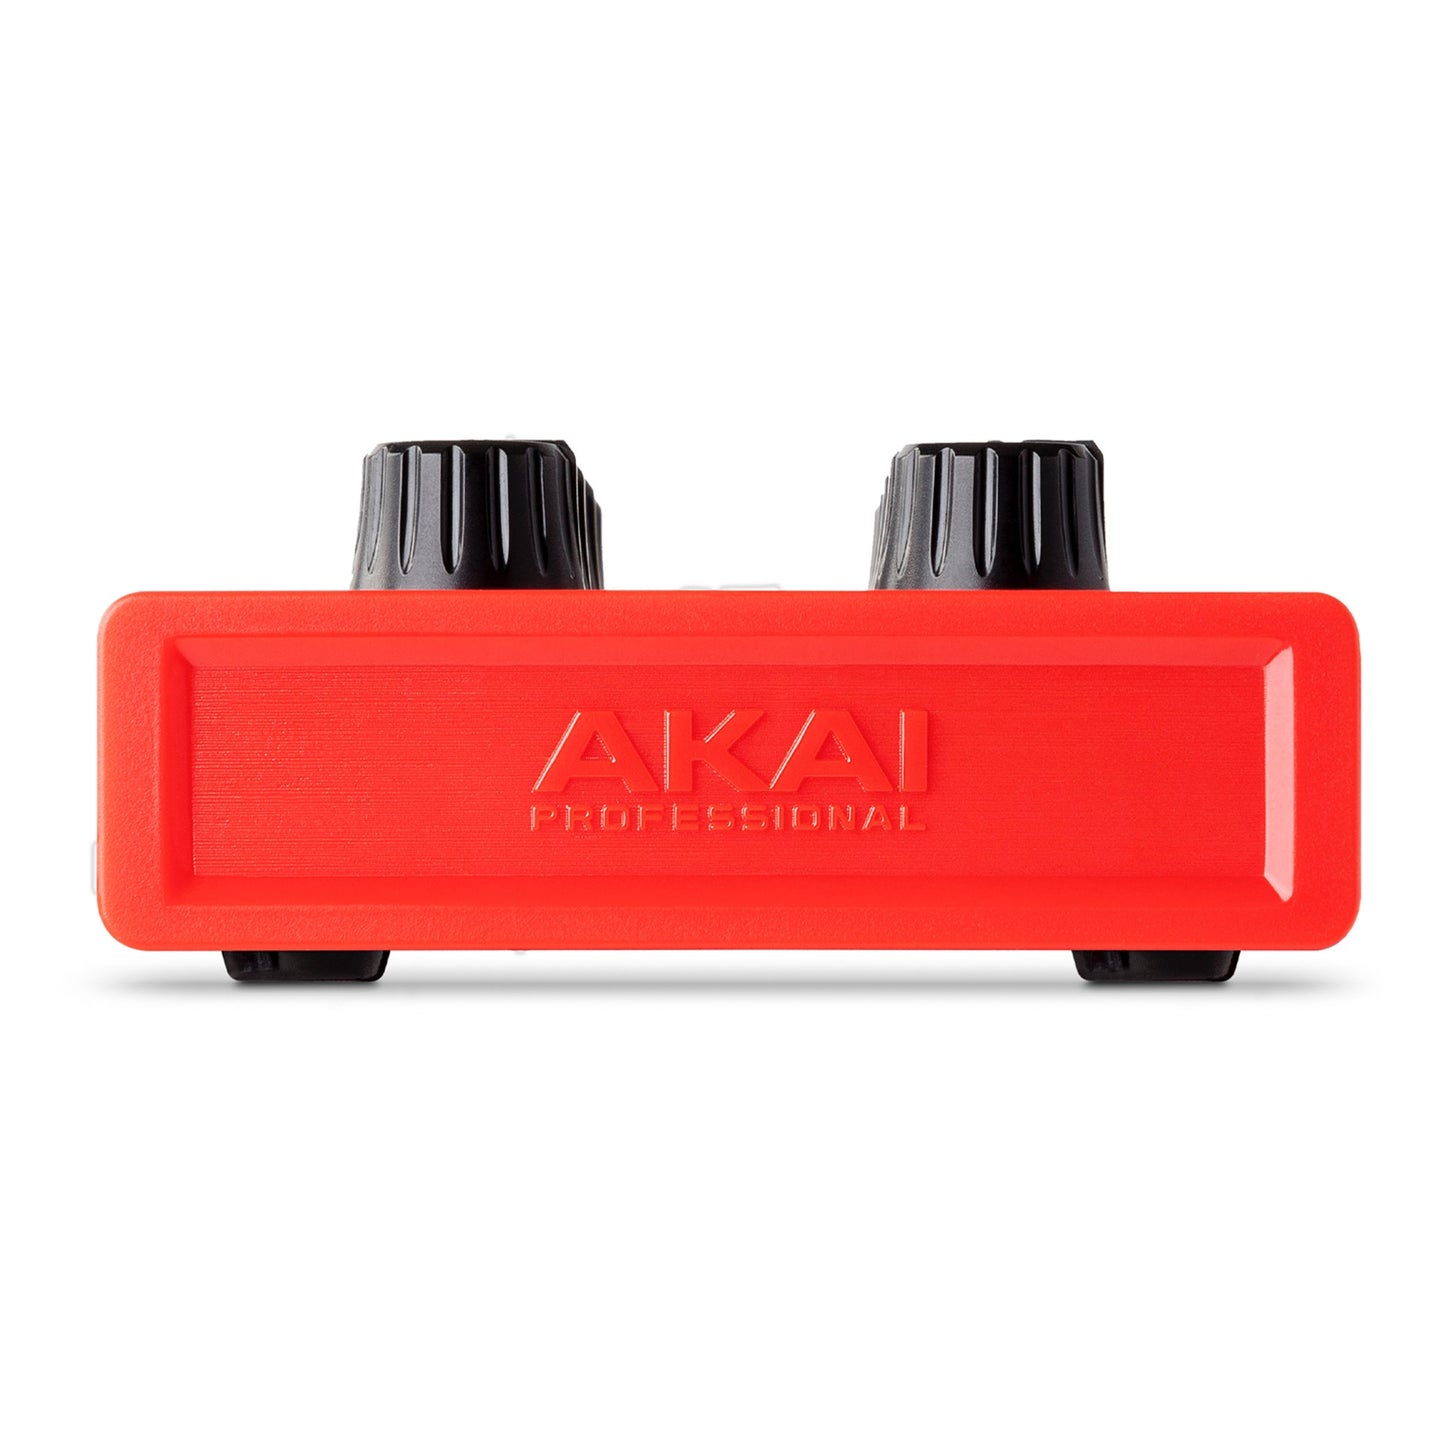 Akai Professional LPD8 MK2 USB-MIDI Pad Controller